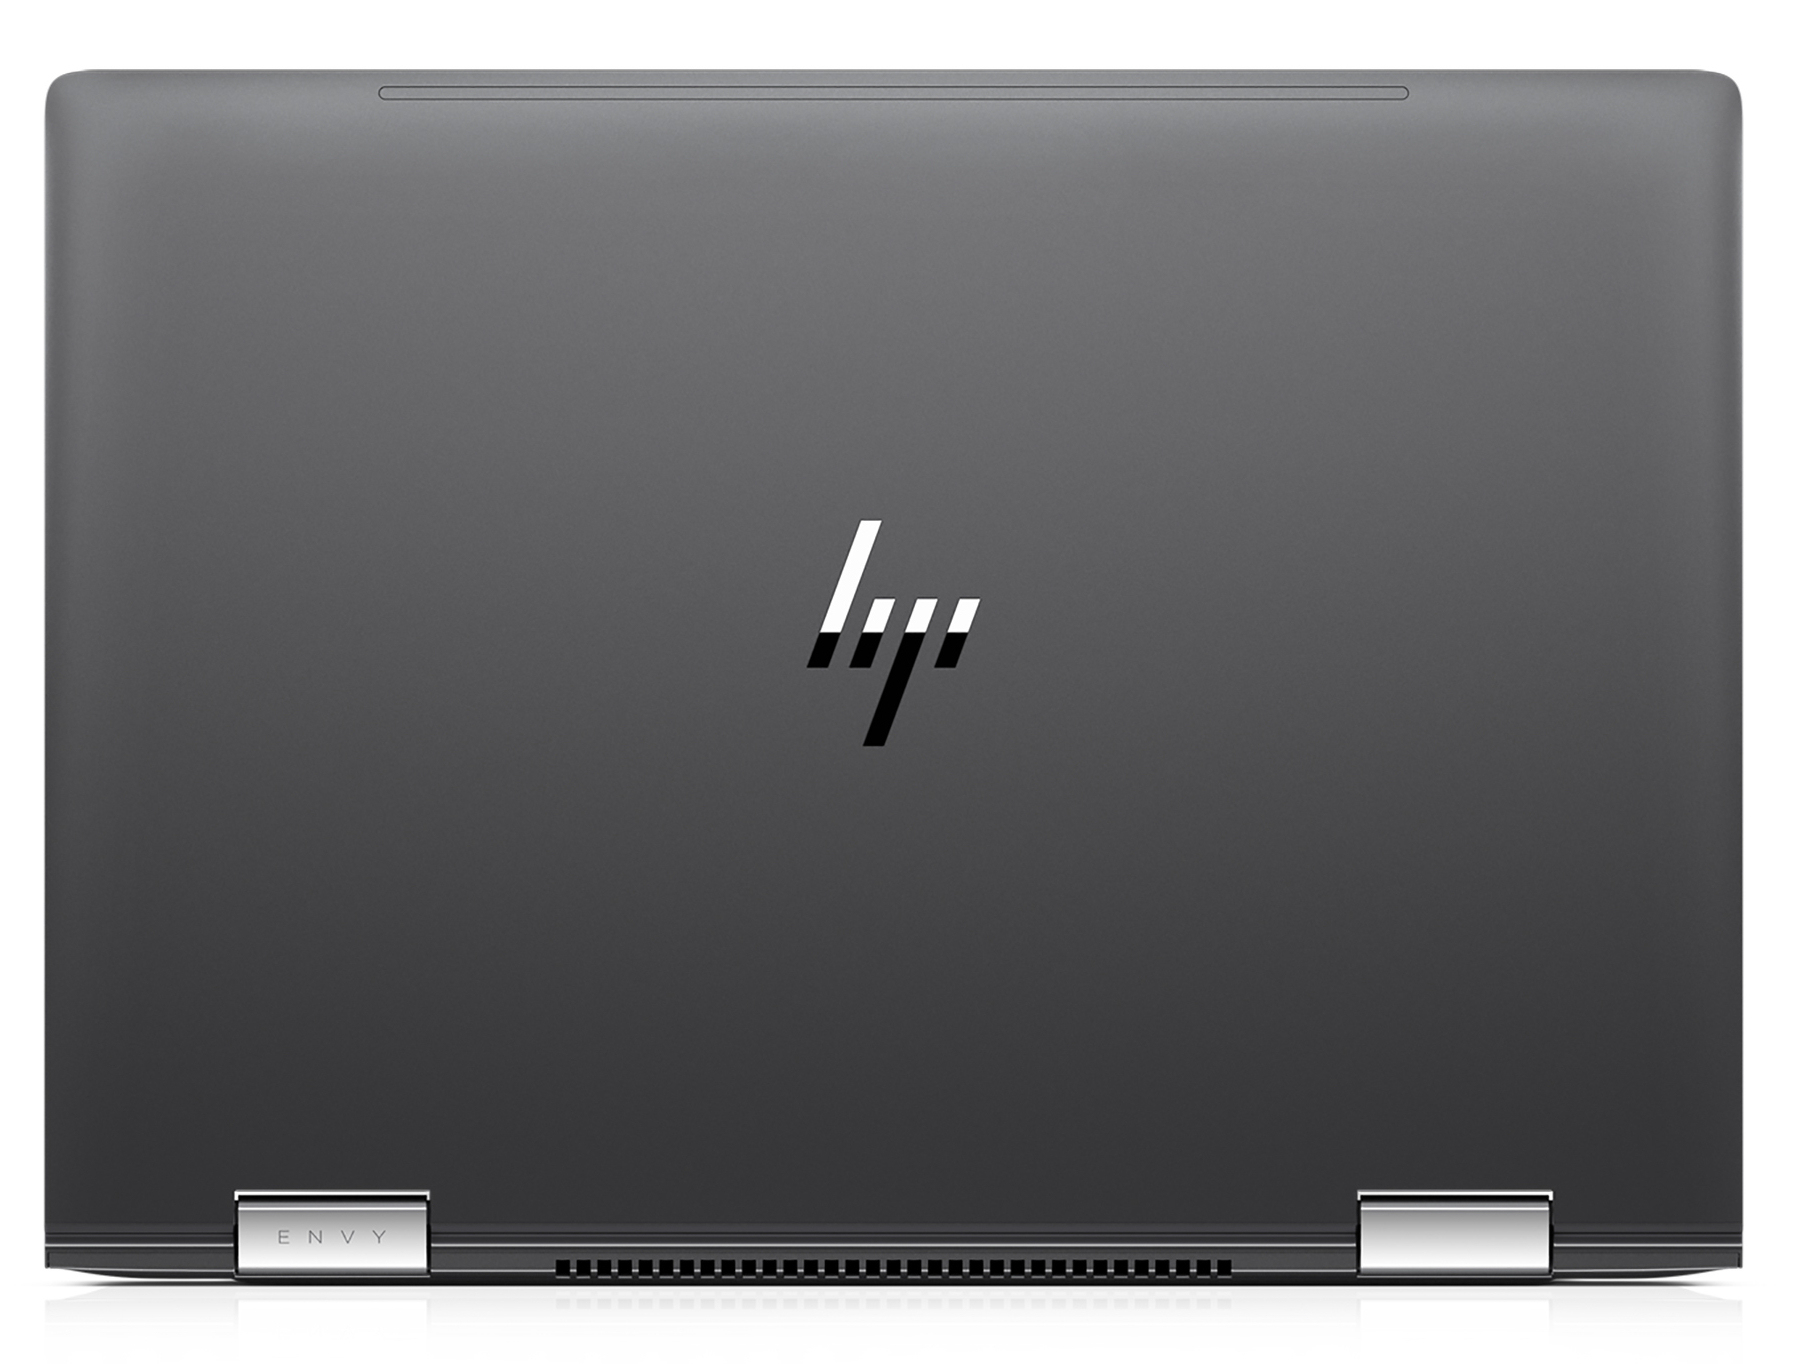 HP Envy x360 15z (Ryzen 5 2500U, Vega 8, SSD, FHD) Convertible 